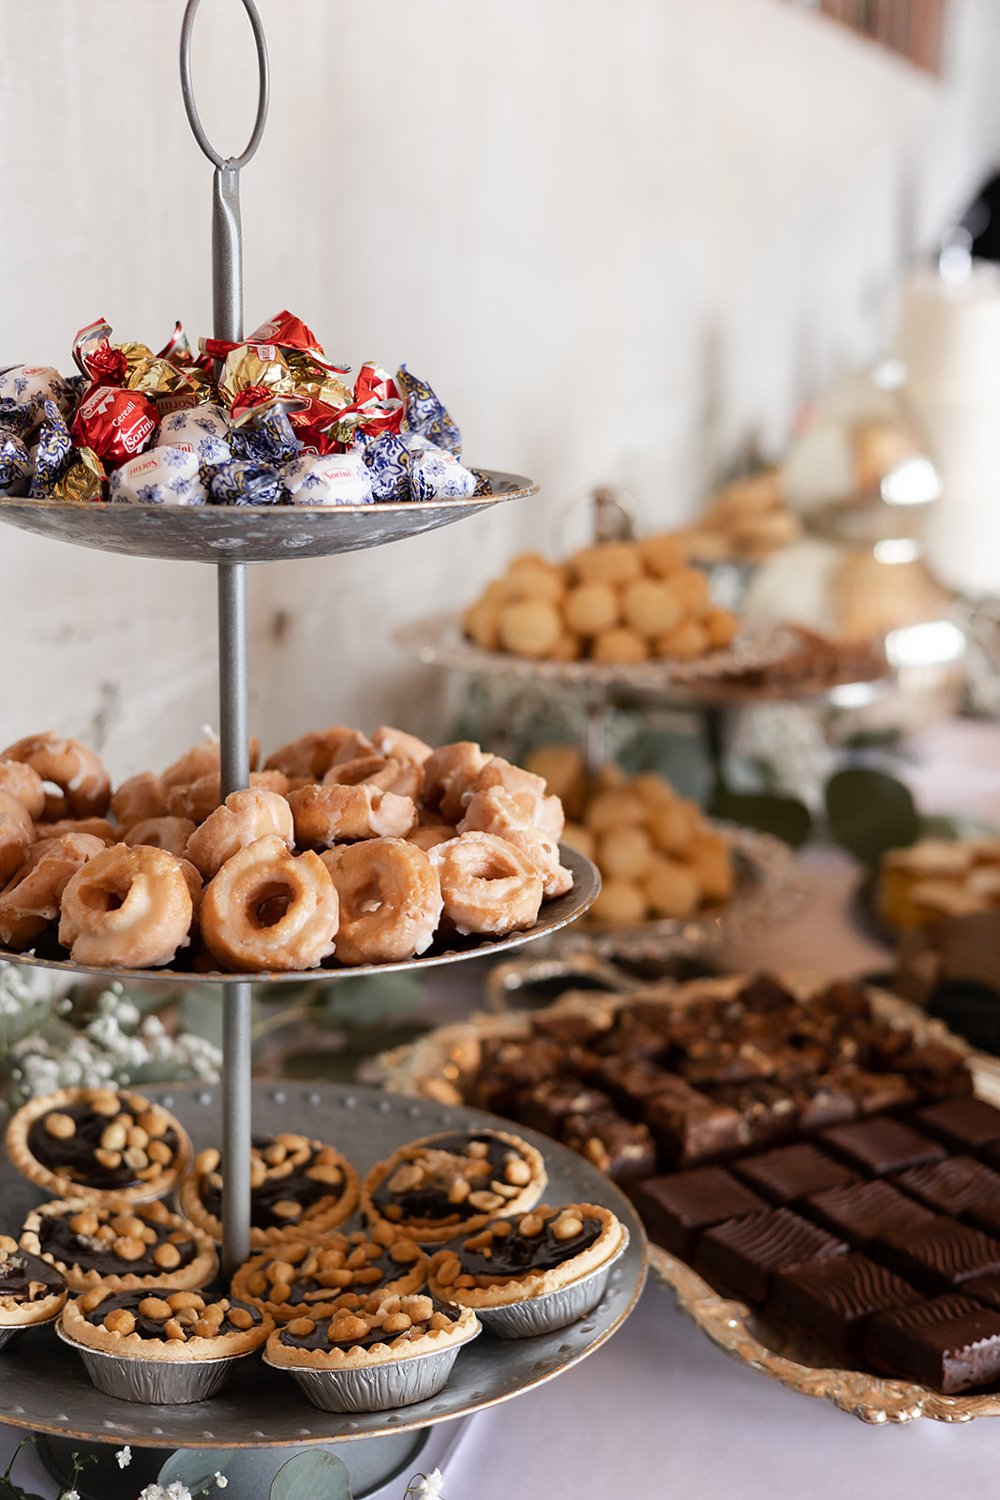 tiered wedding dessert bar display with chocolates donuts and mini chocolate hazelnut pies